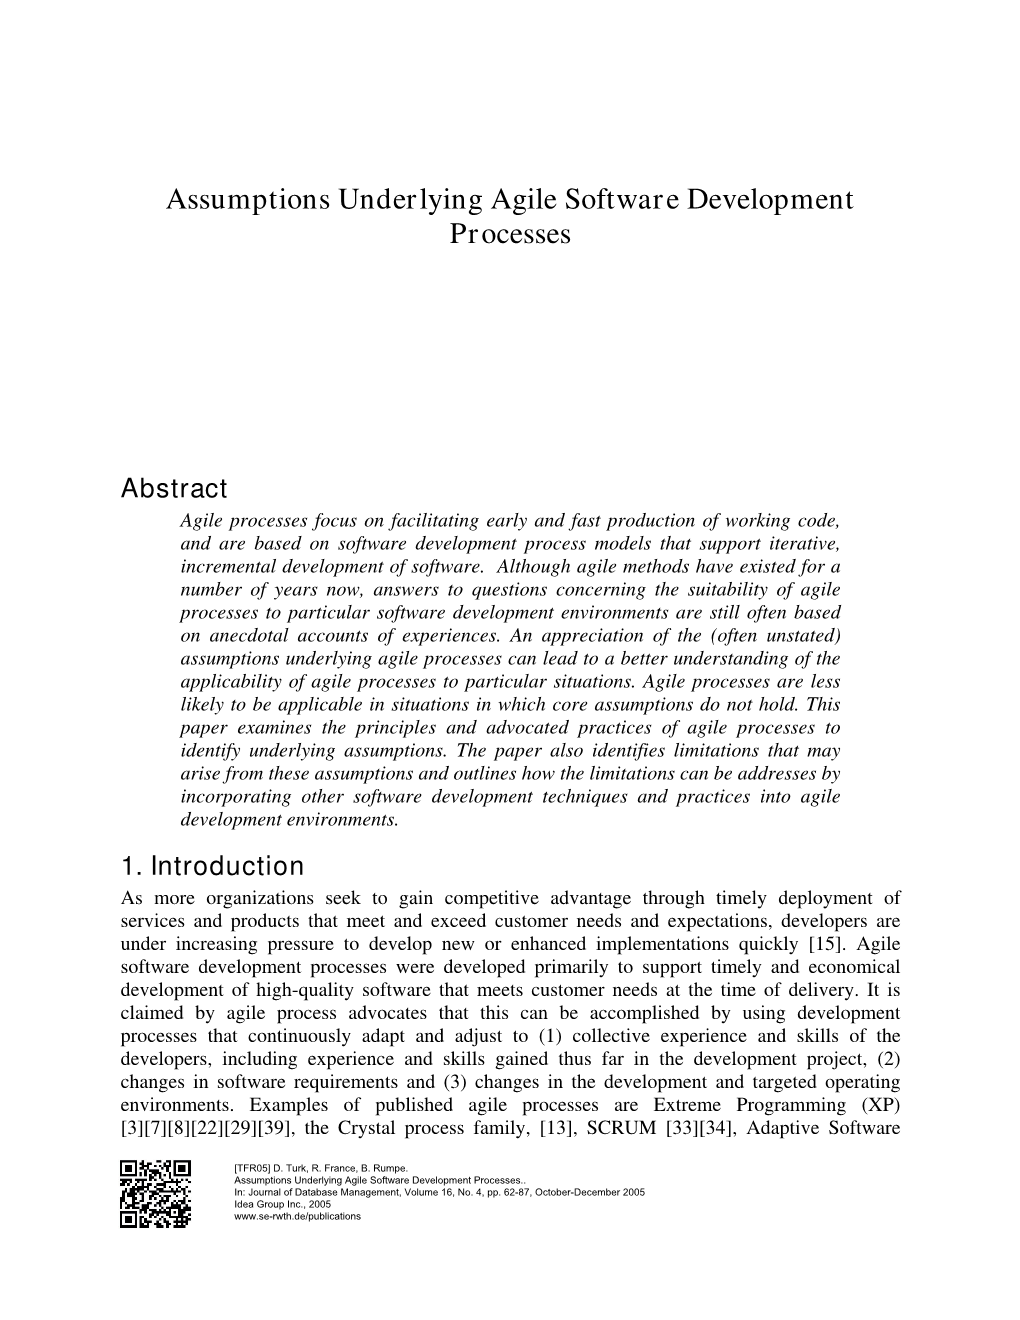 Assumptions Underlying Agile Software Development Processes